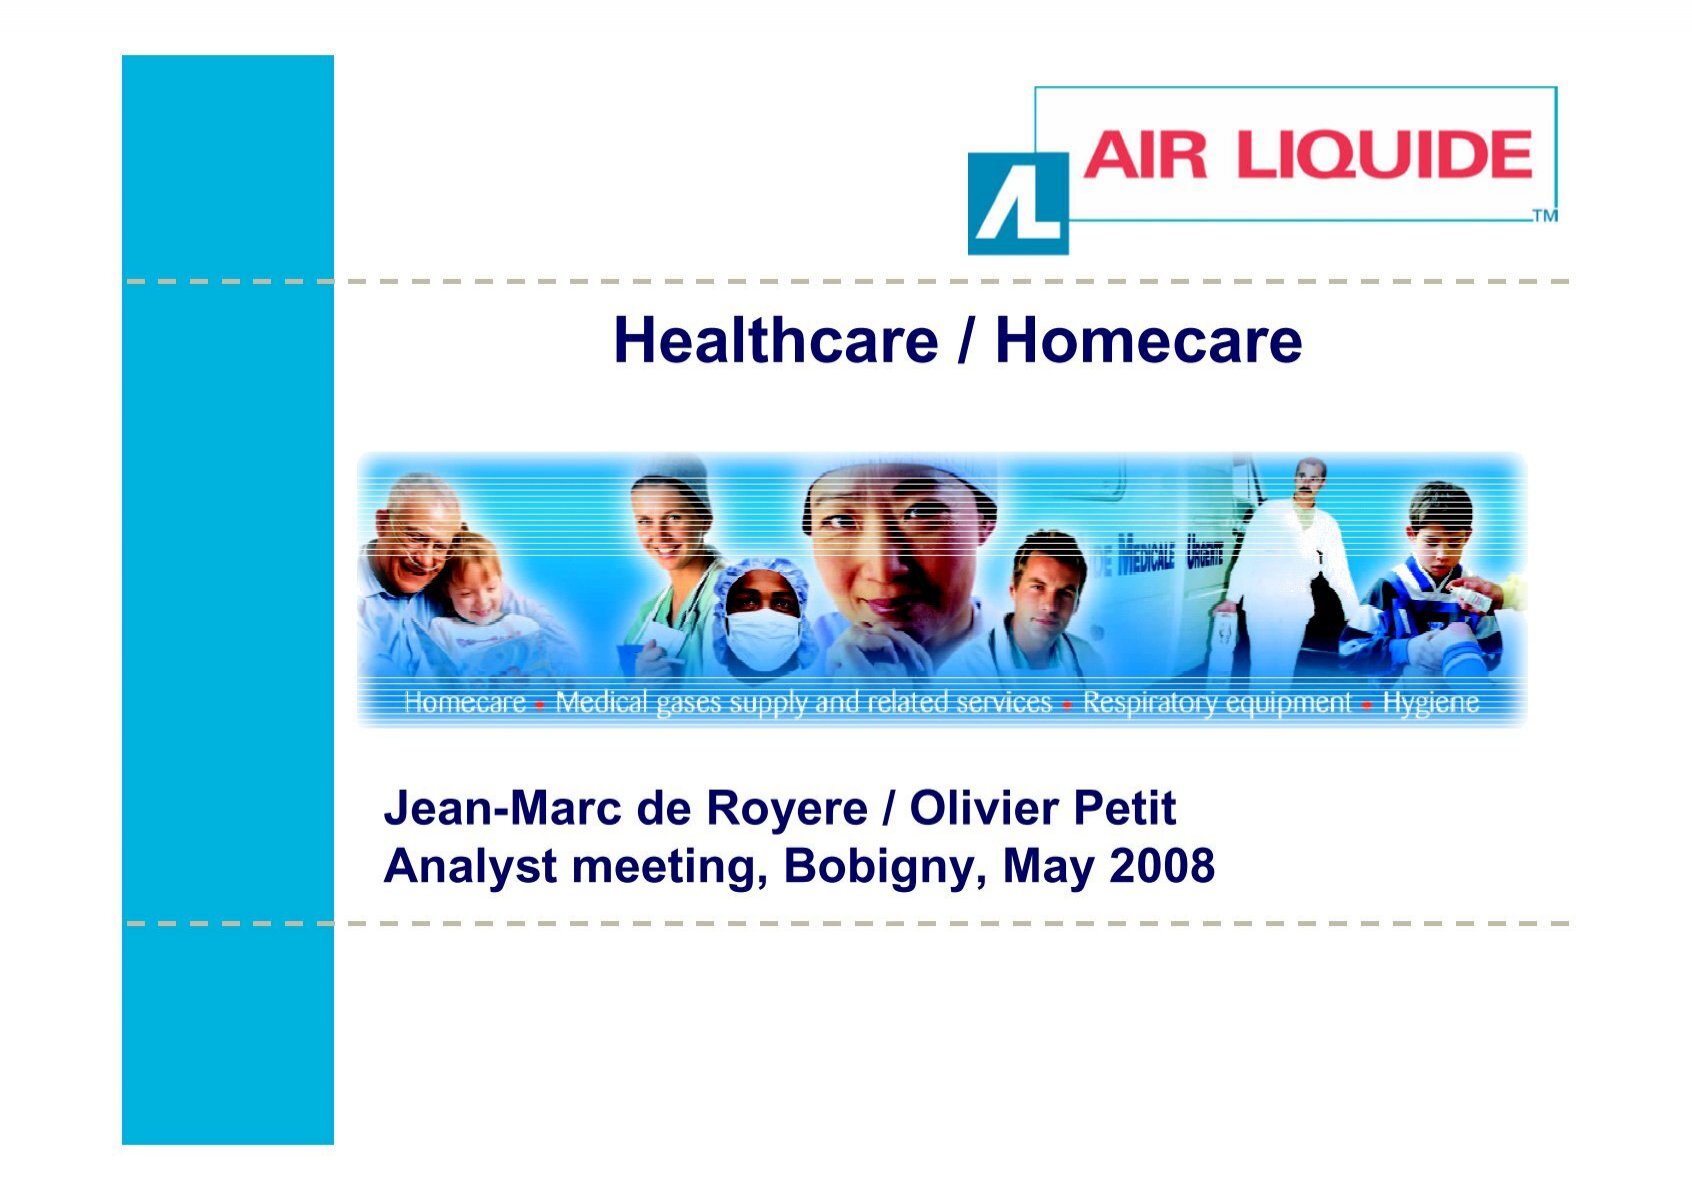 Jean-Marc de Royere - Air Liquide